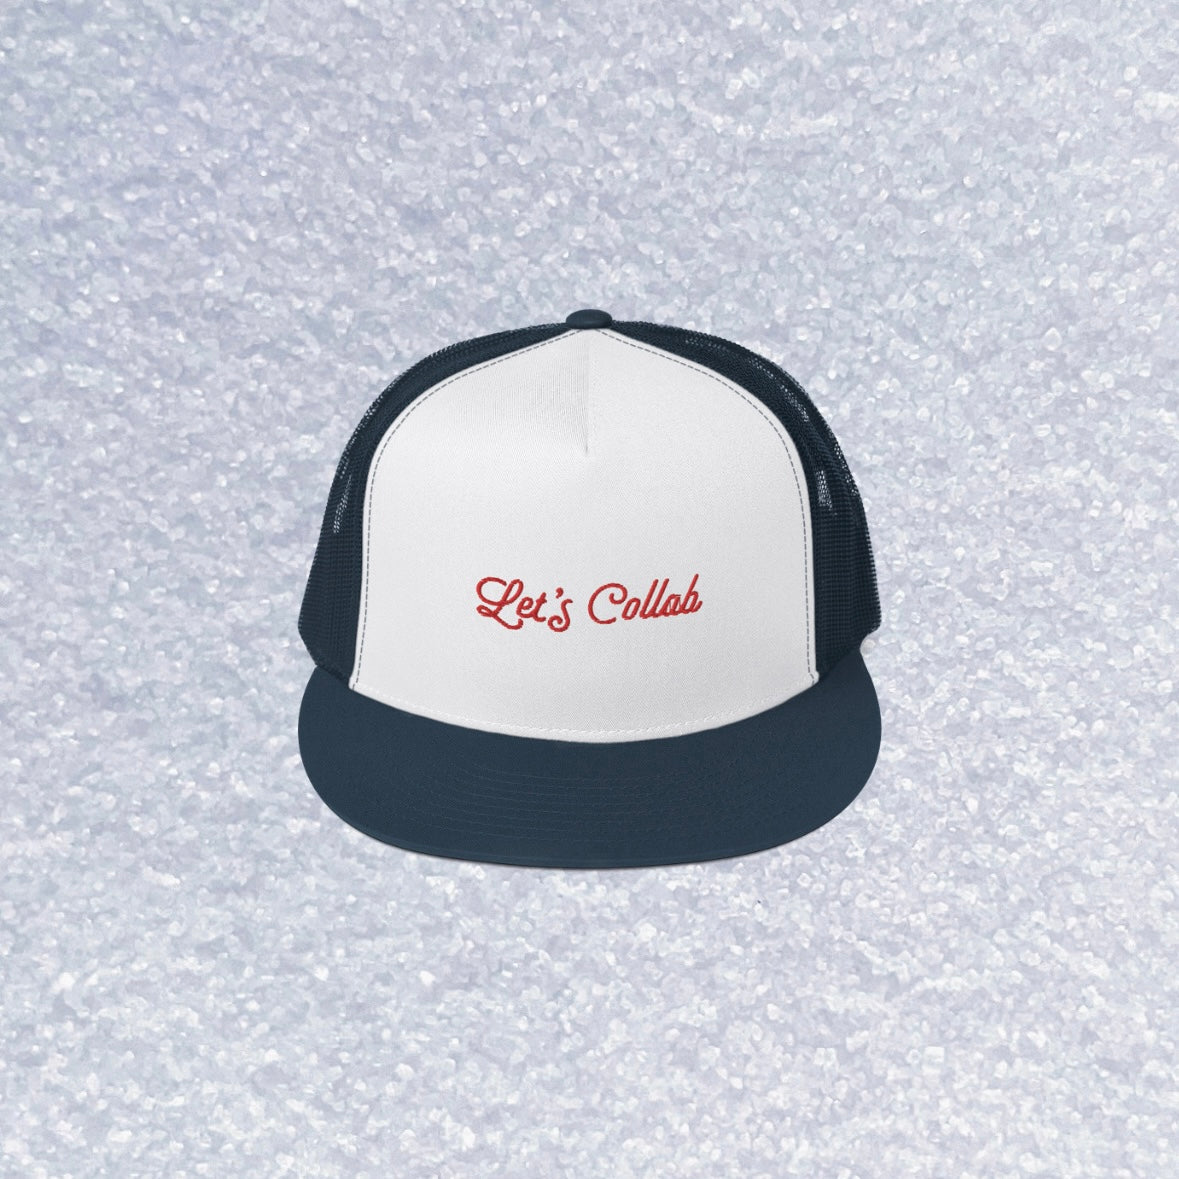 Let’s Collab - Trucker Hat